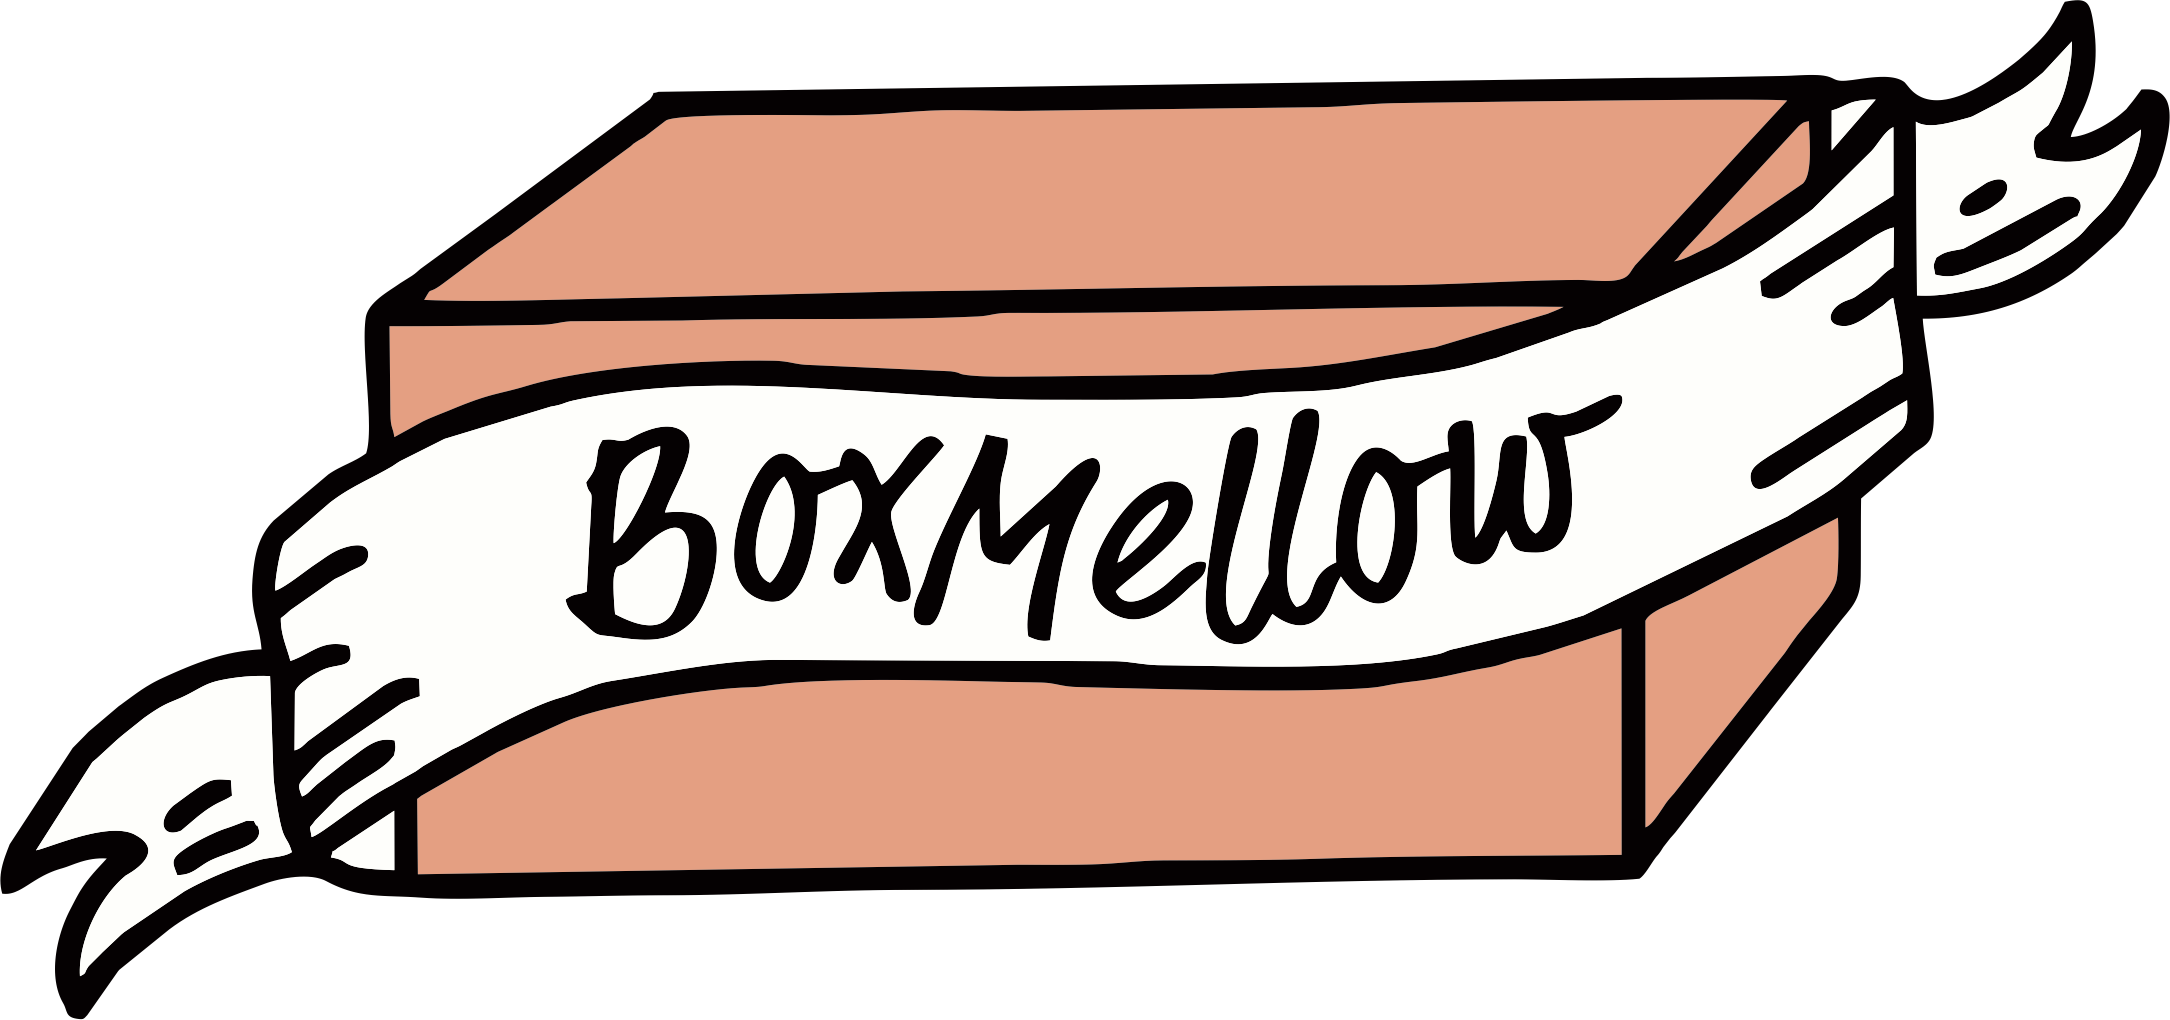 Boxmellow